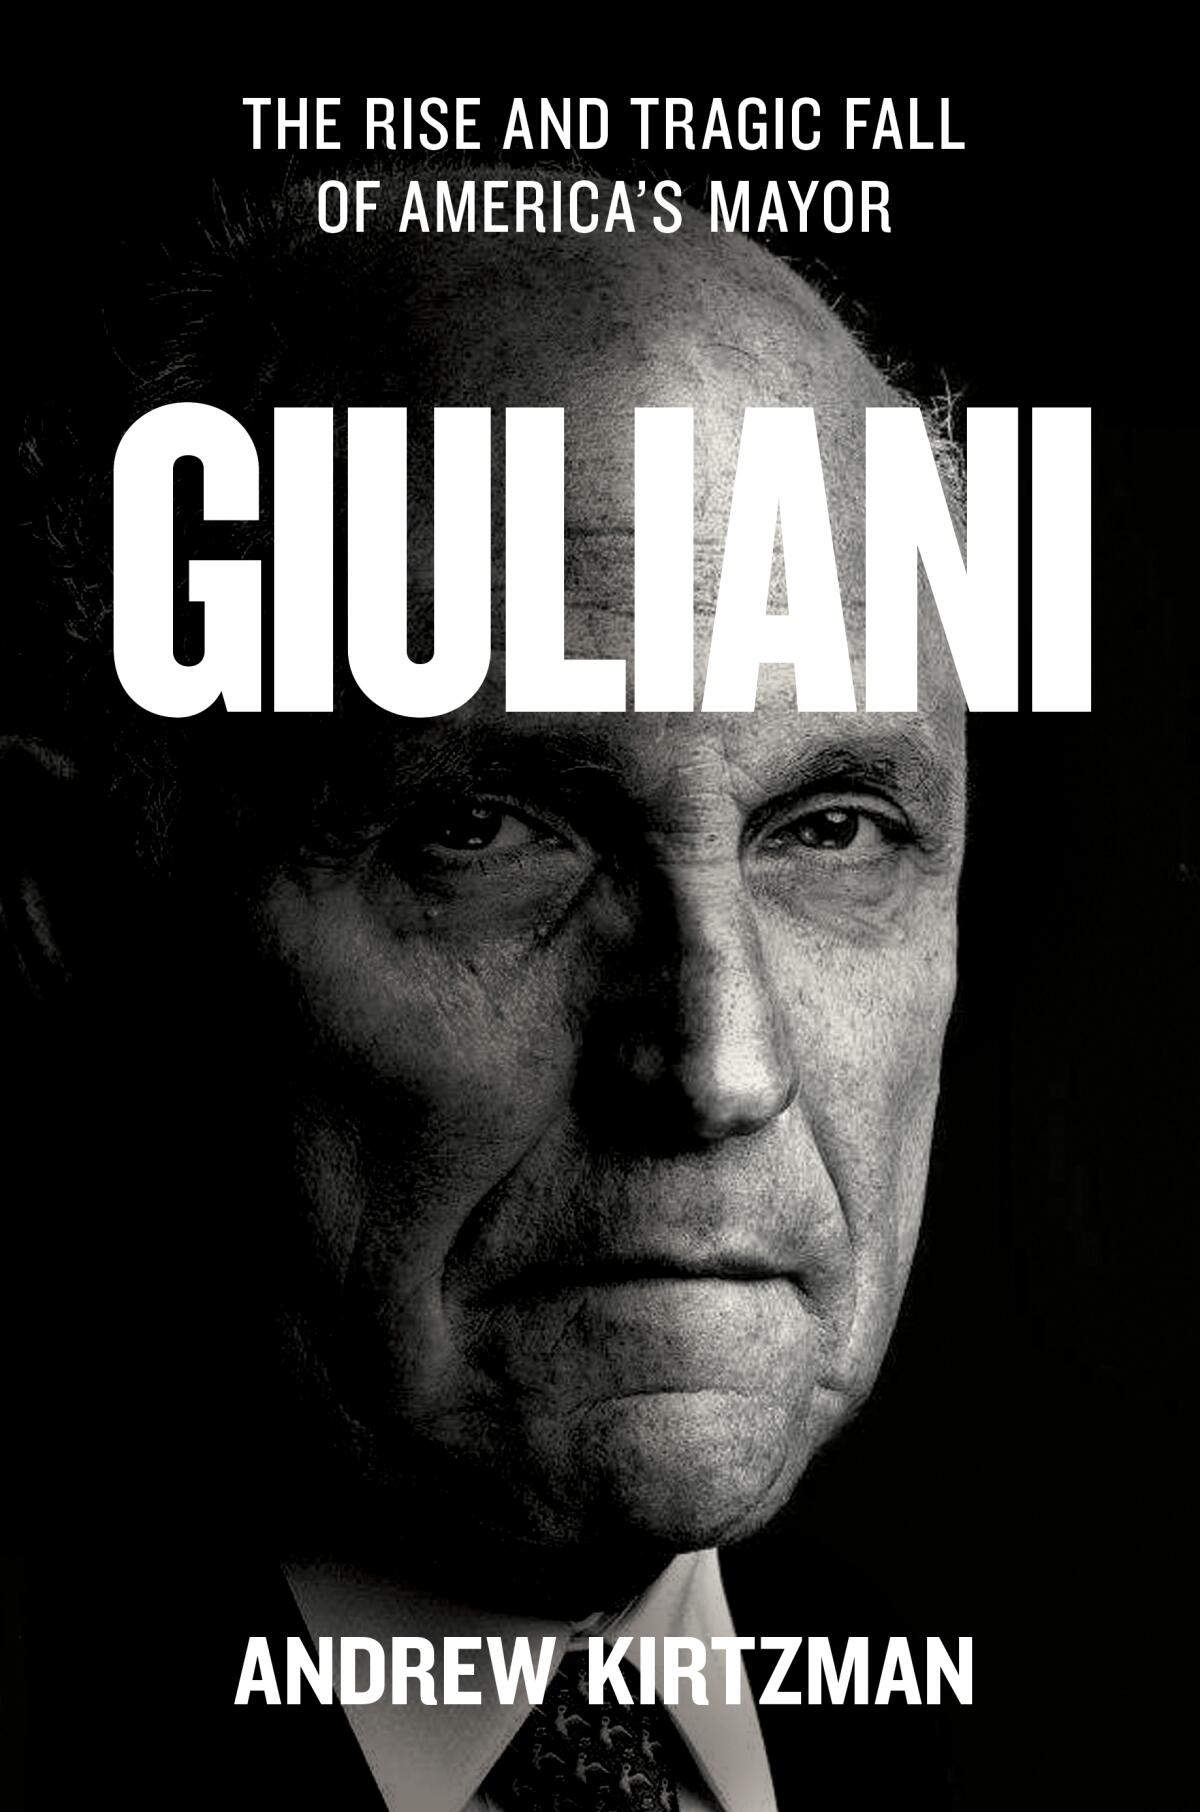 "Giuliani: The Rise and Tragic Fall of America's Mayor" by Andrew Kirtzman